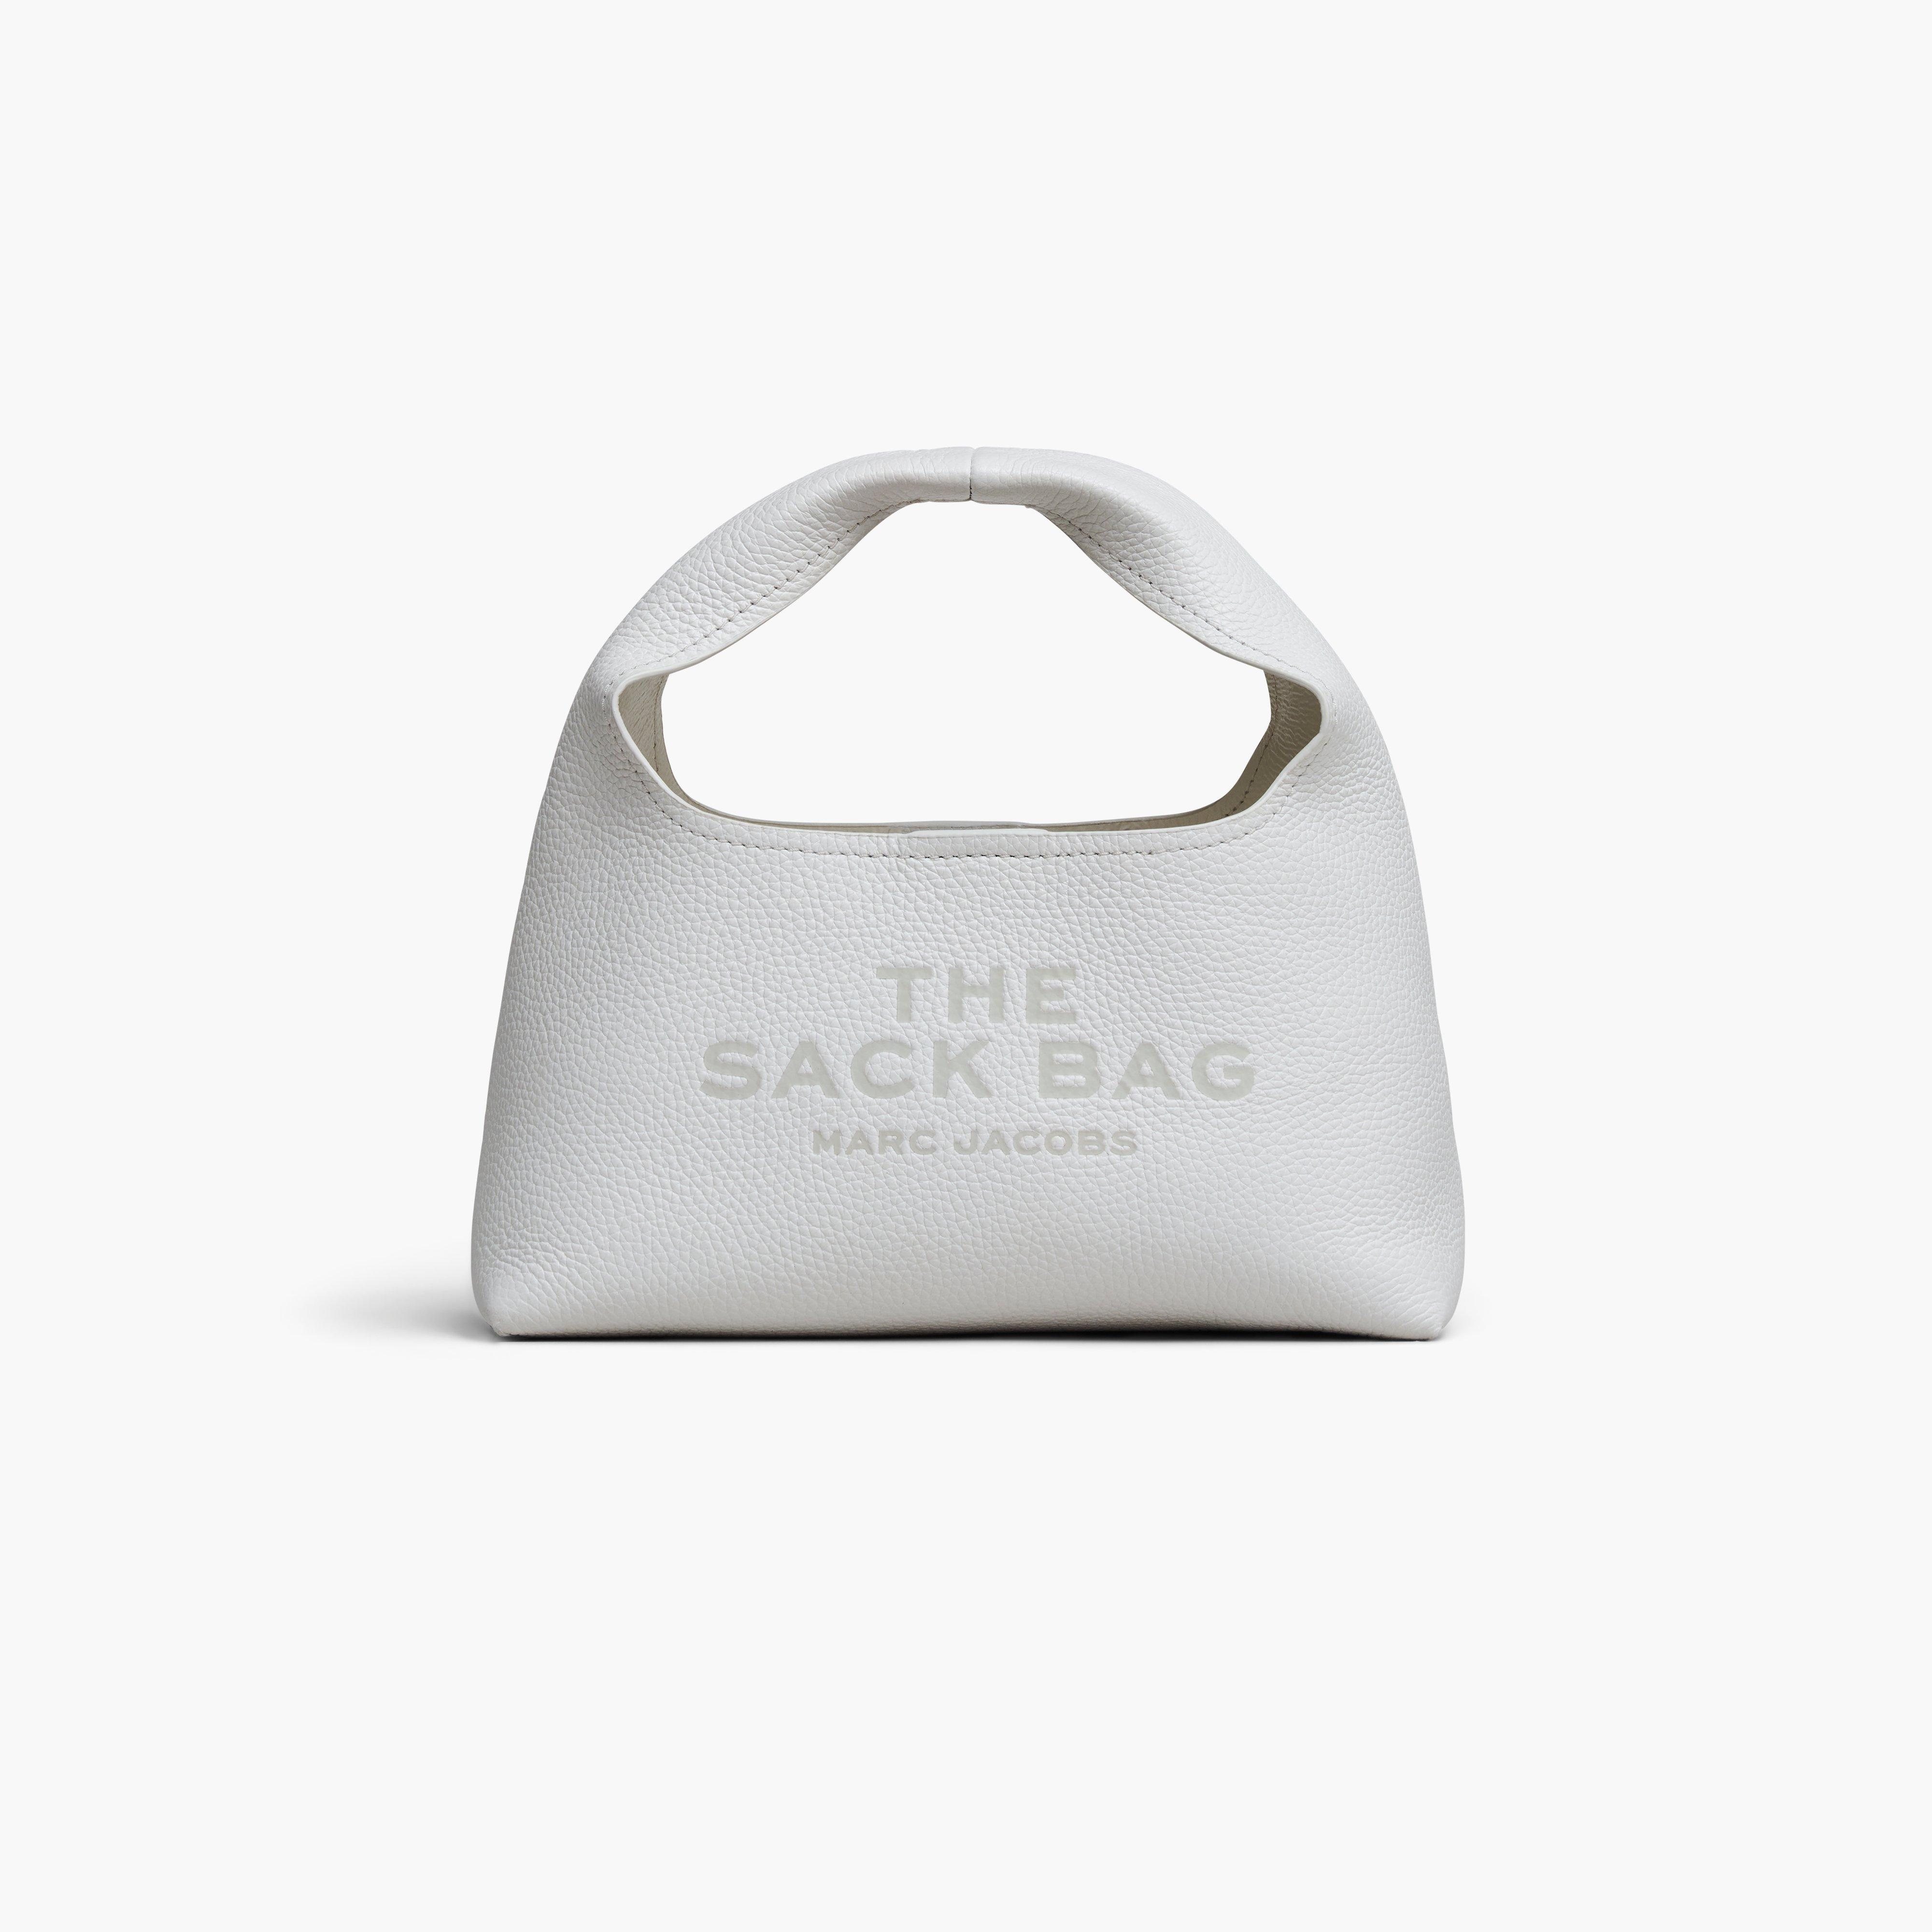 THE MINI SACK BAG - 1